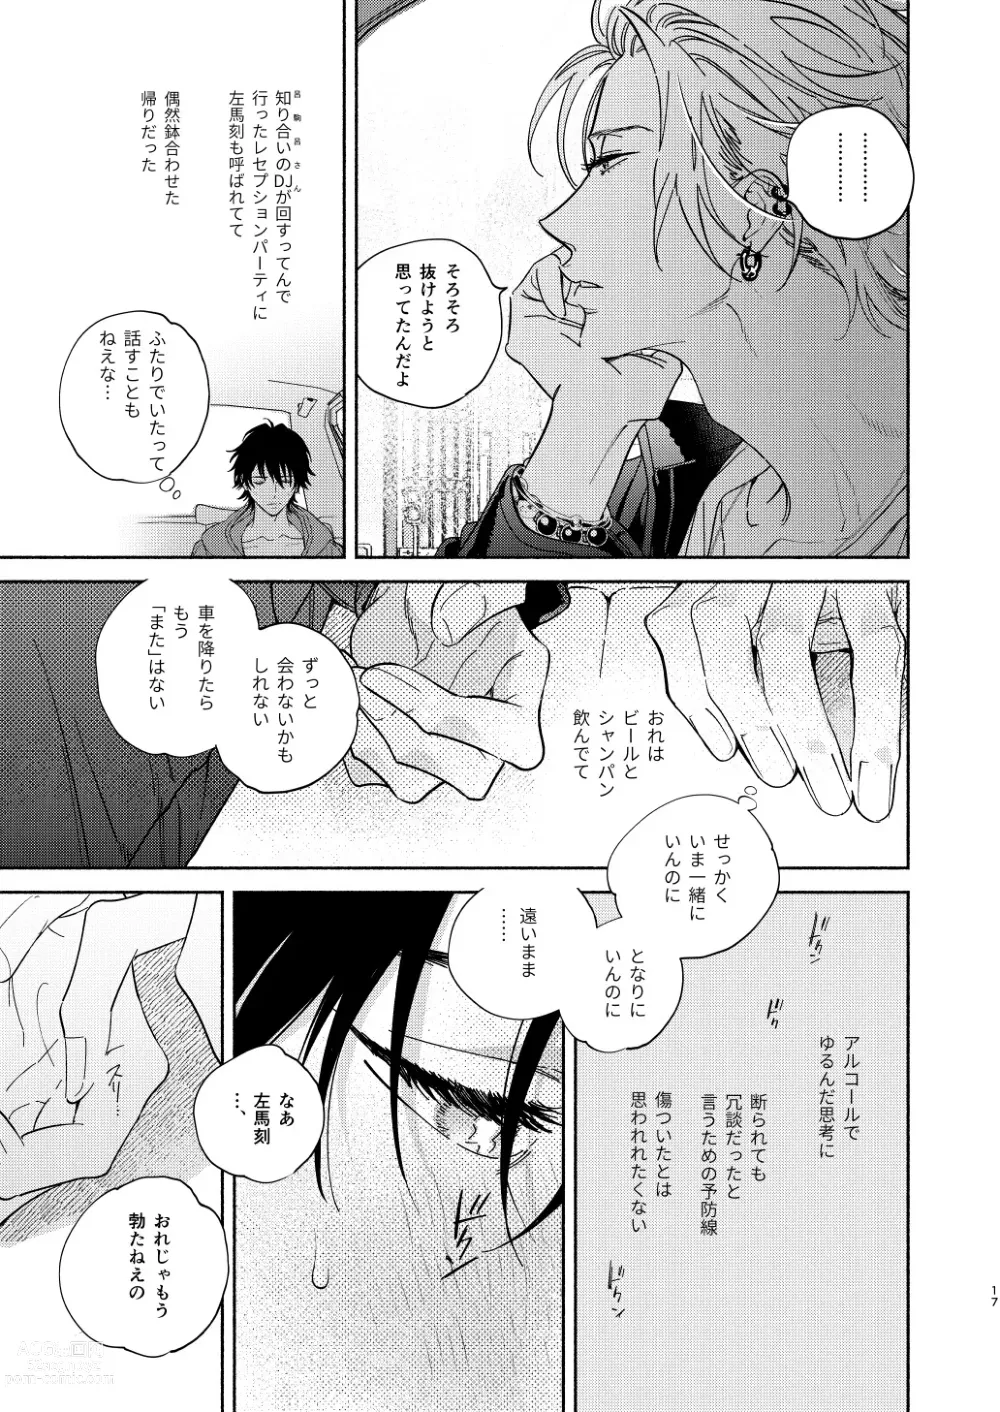 Page 14 of doujinshi Warukunai Hi